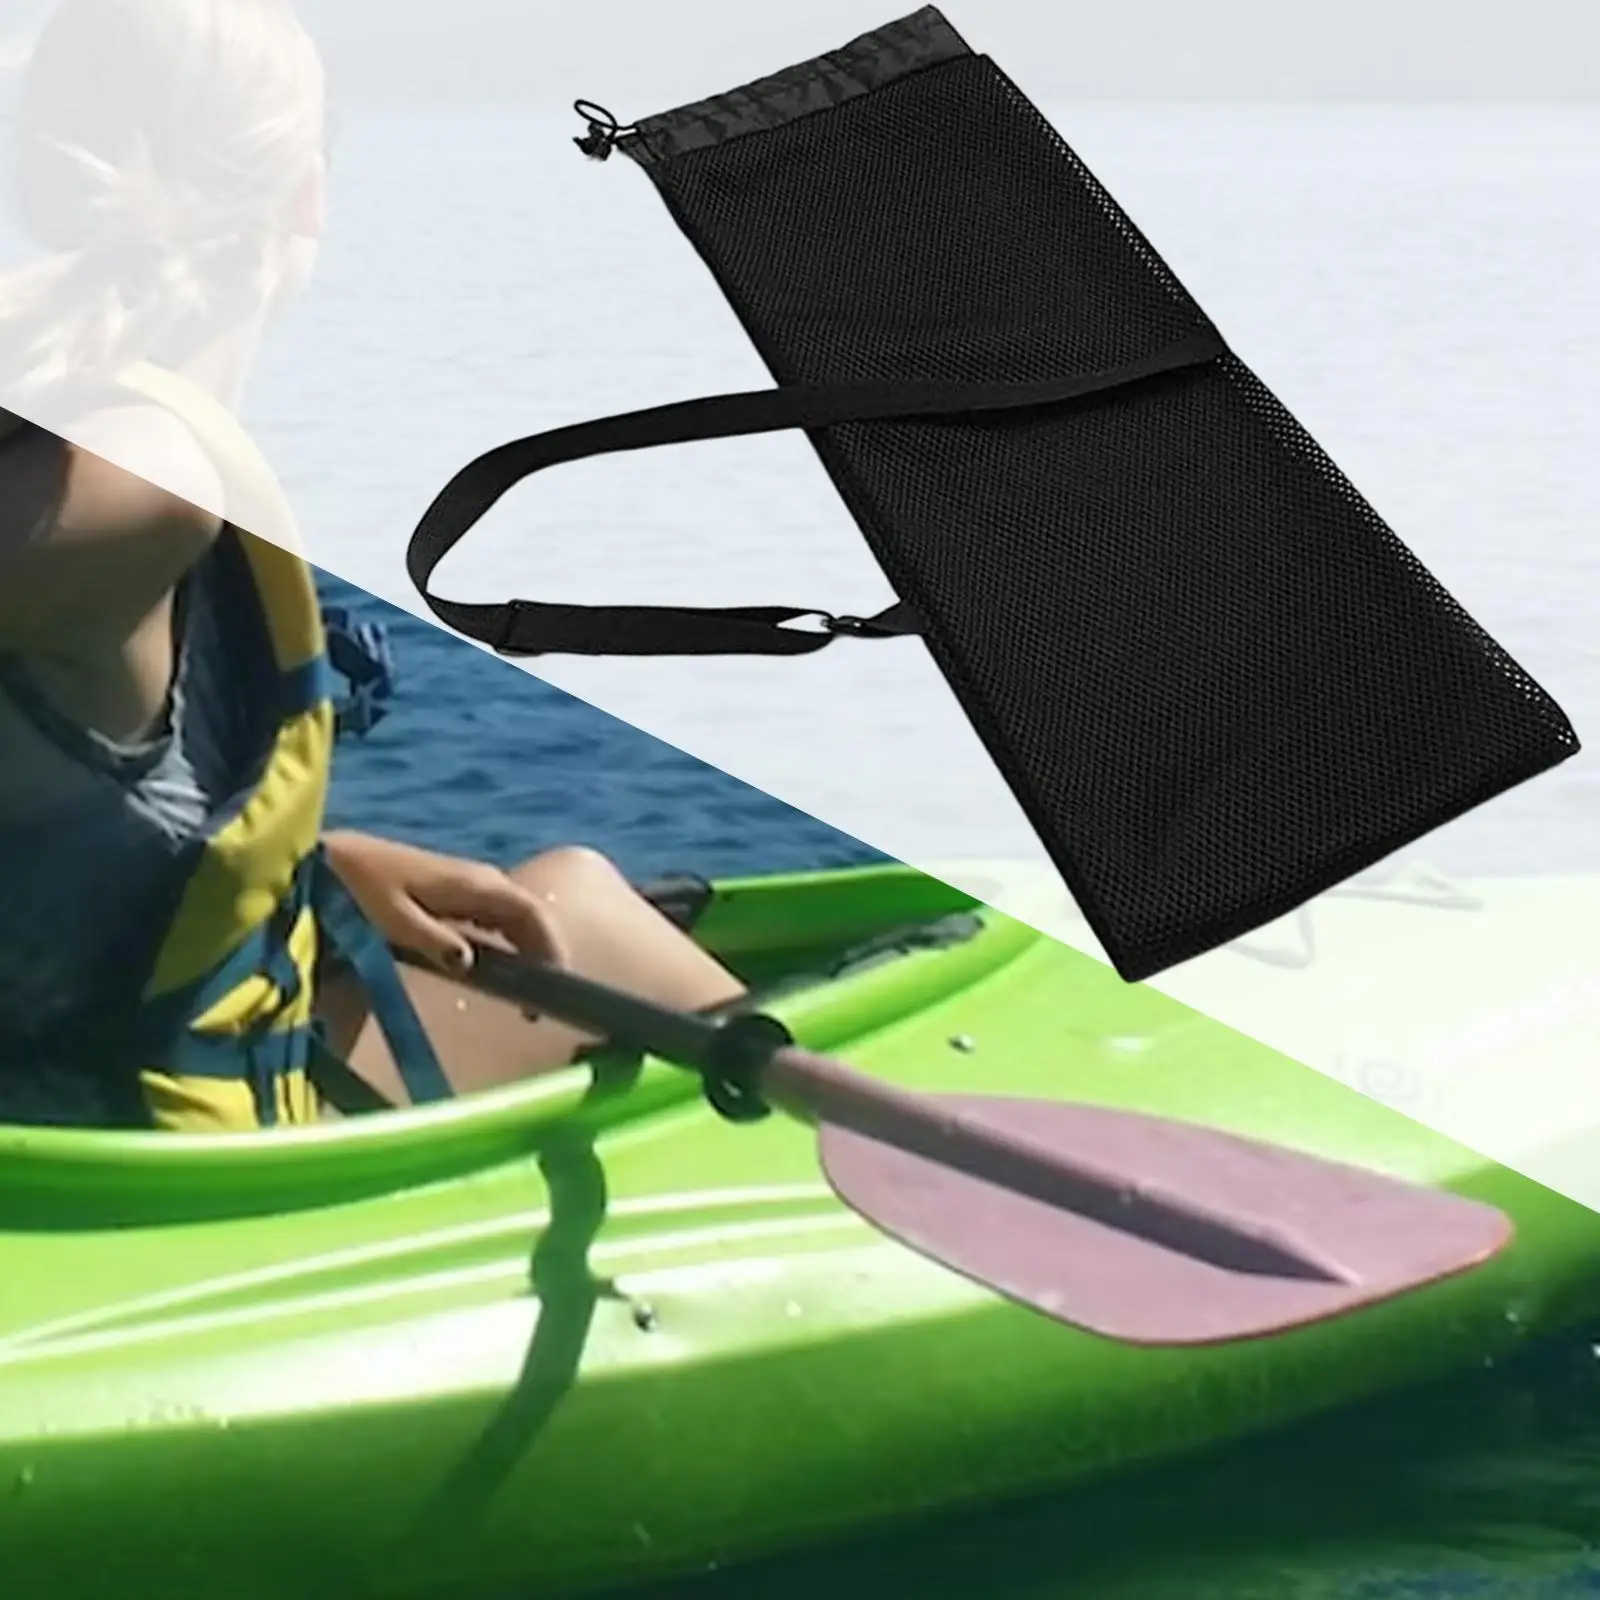 Durable Kayak Paddle Bag Adjustable Strap for Canoe Holder Carrying Bag Split Shaft Drawstring Mesh Pouch Case Protector Cover